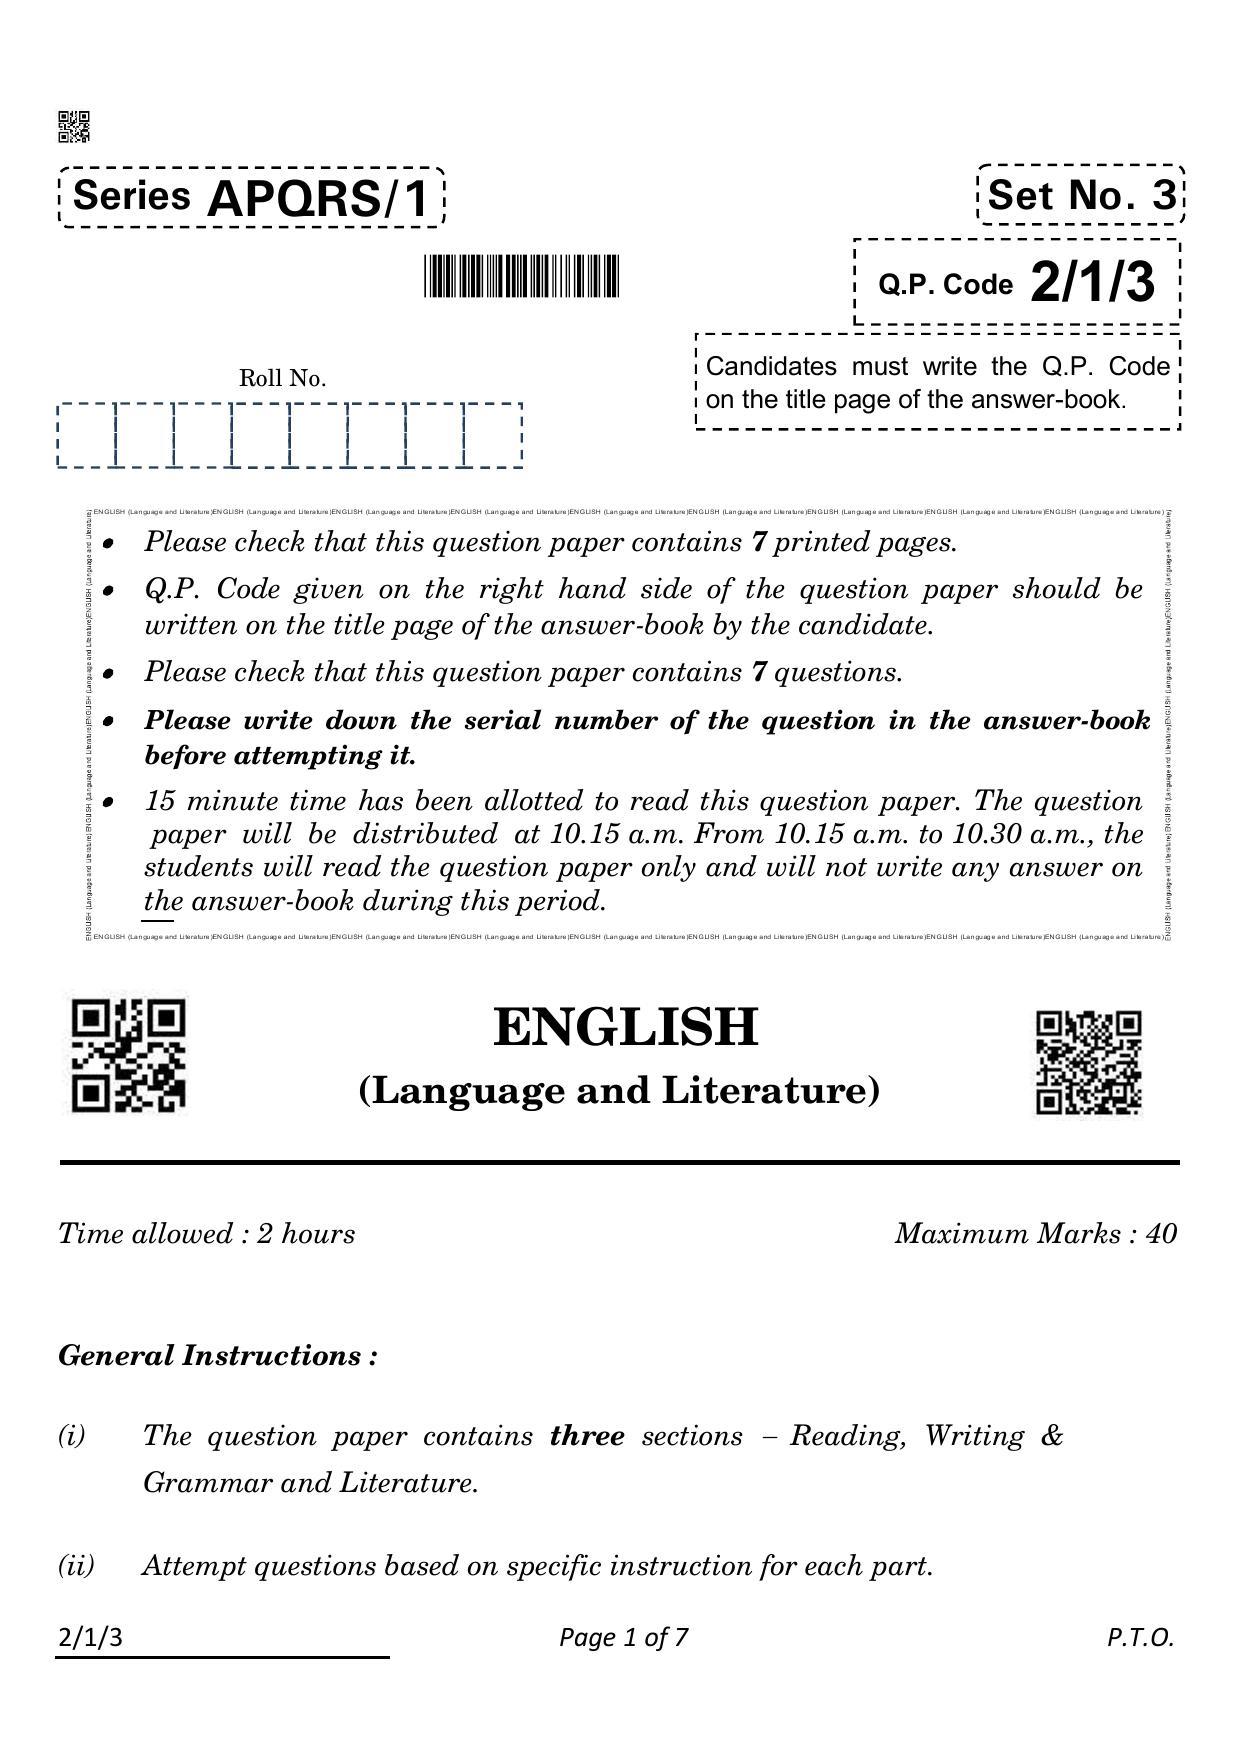 CBSE Class 10 2-1-3 English L & L 2022 Question Paper - Page 1